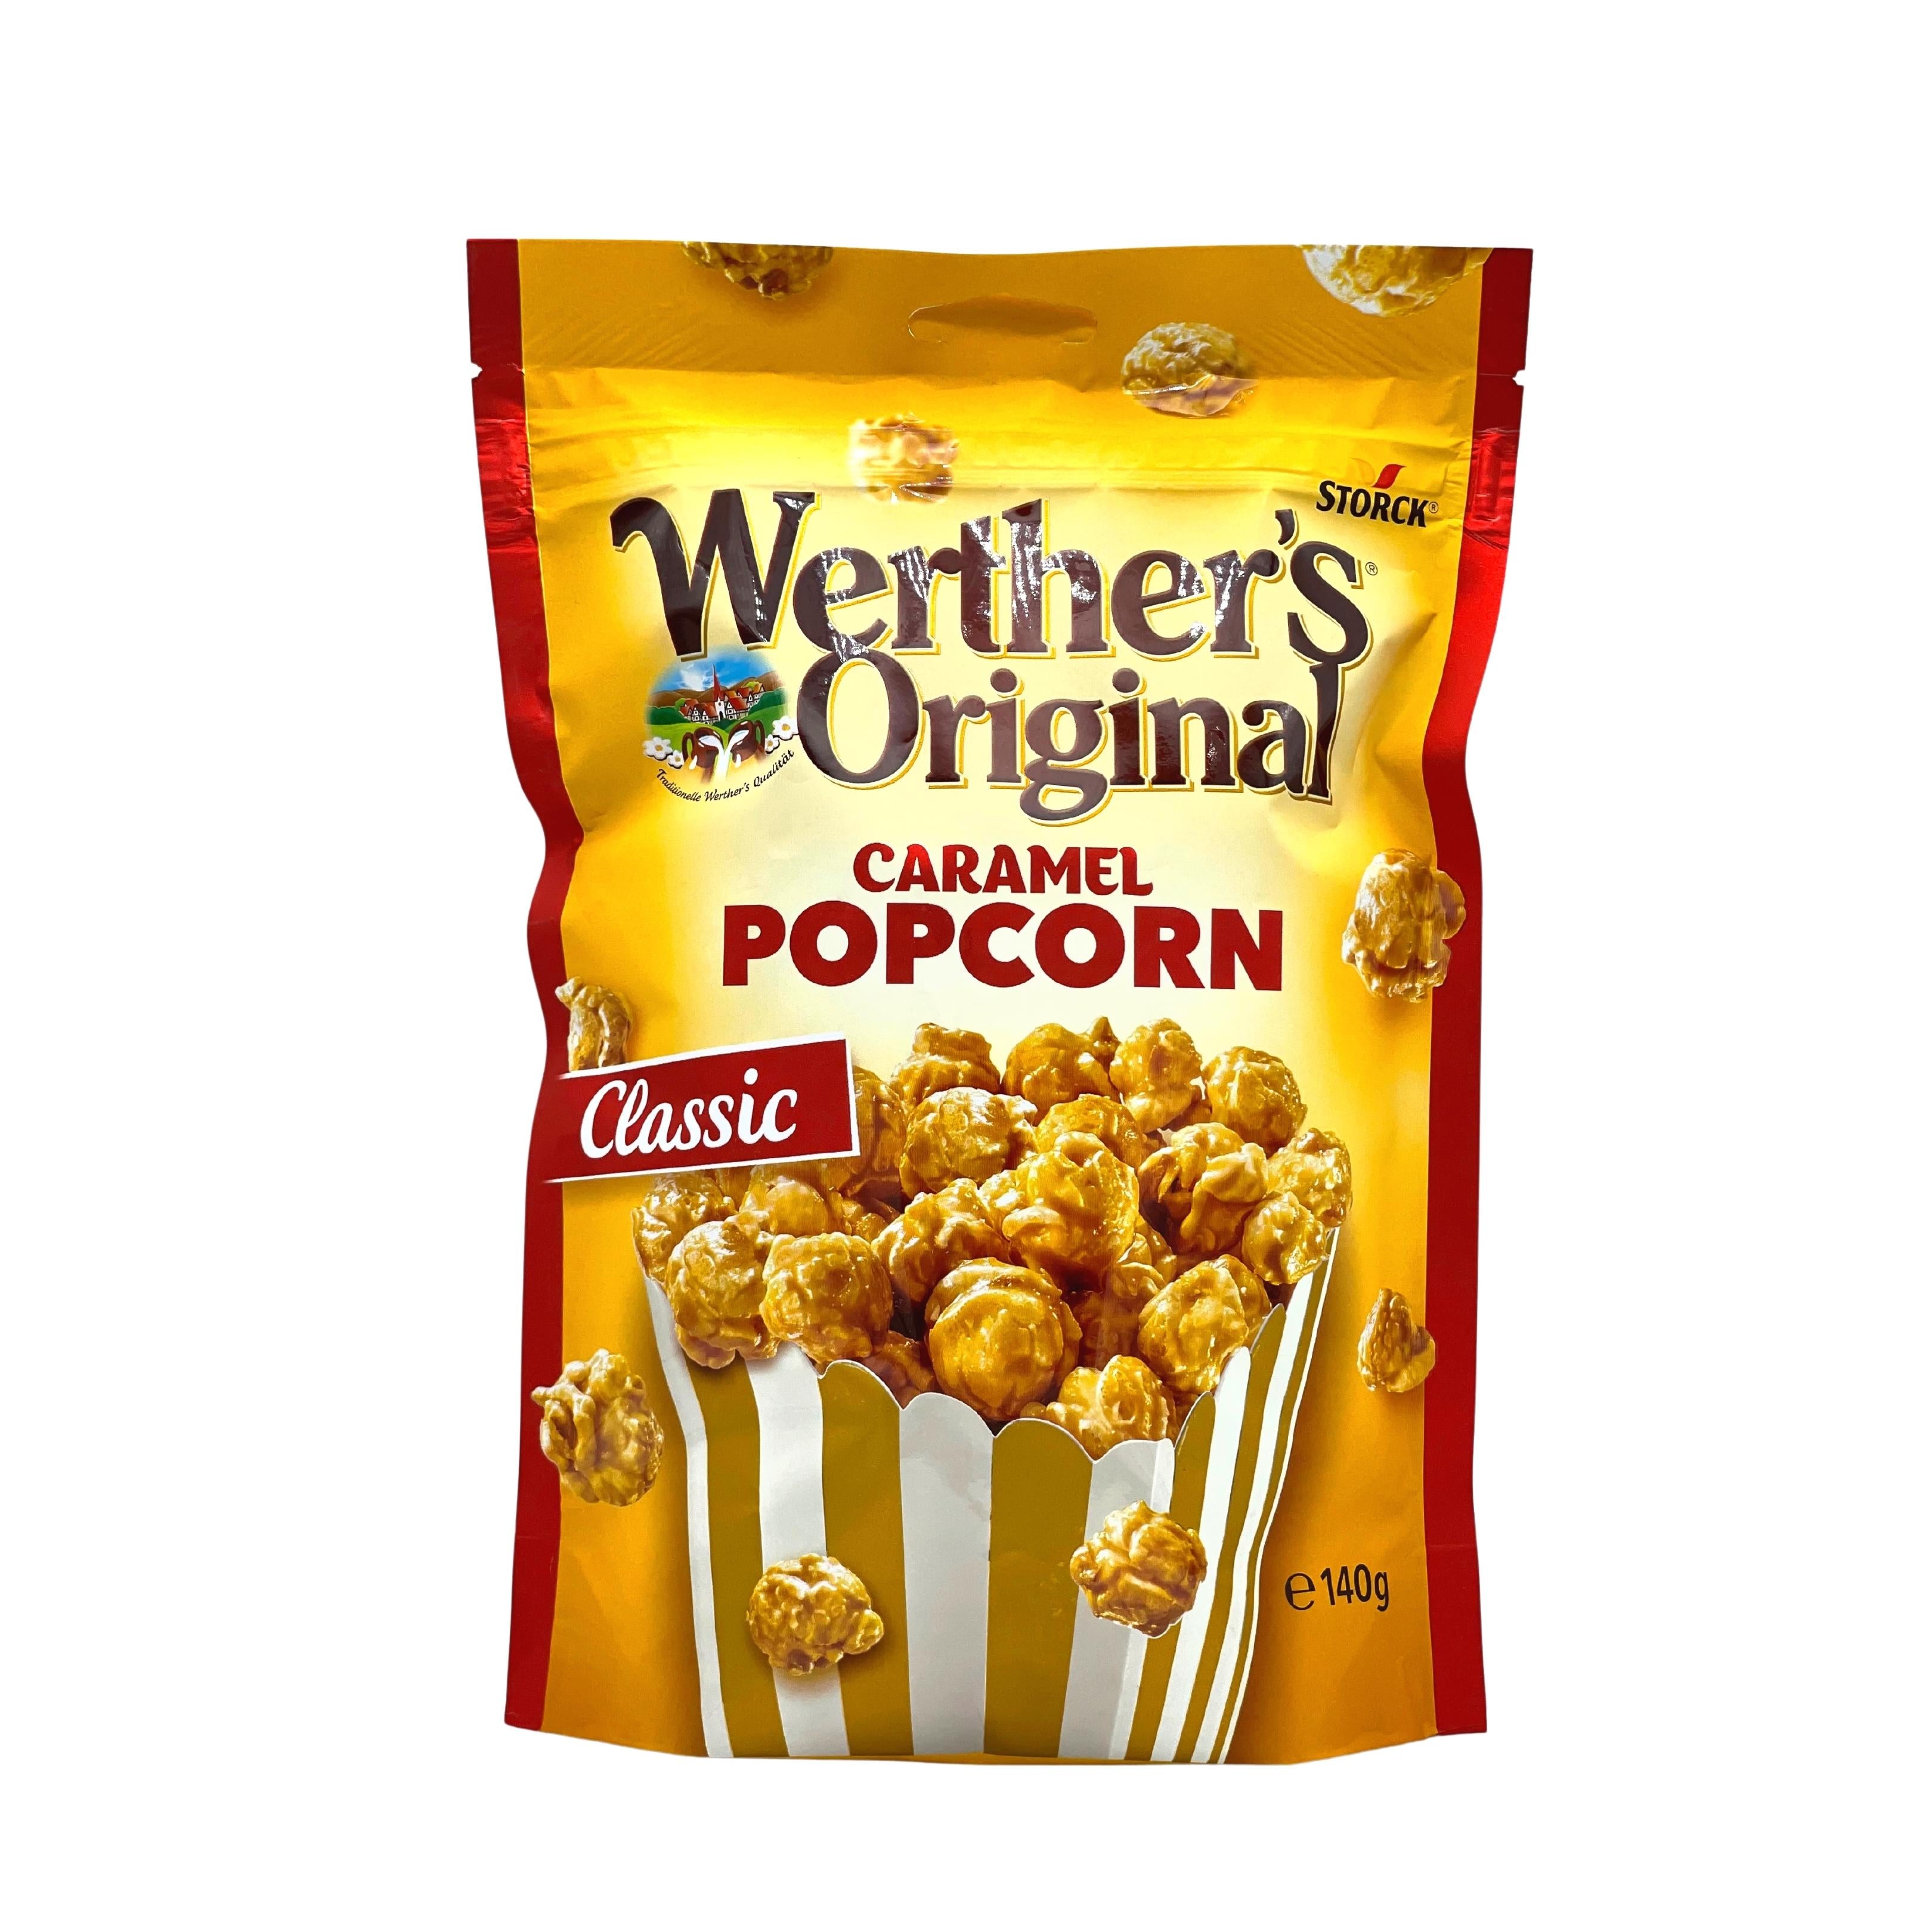 Werther’s Original - Caramel Popcorn Original 140g